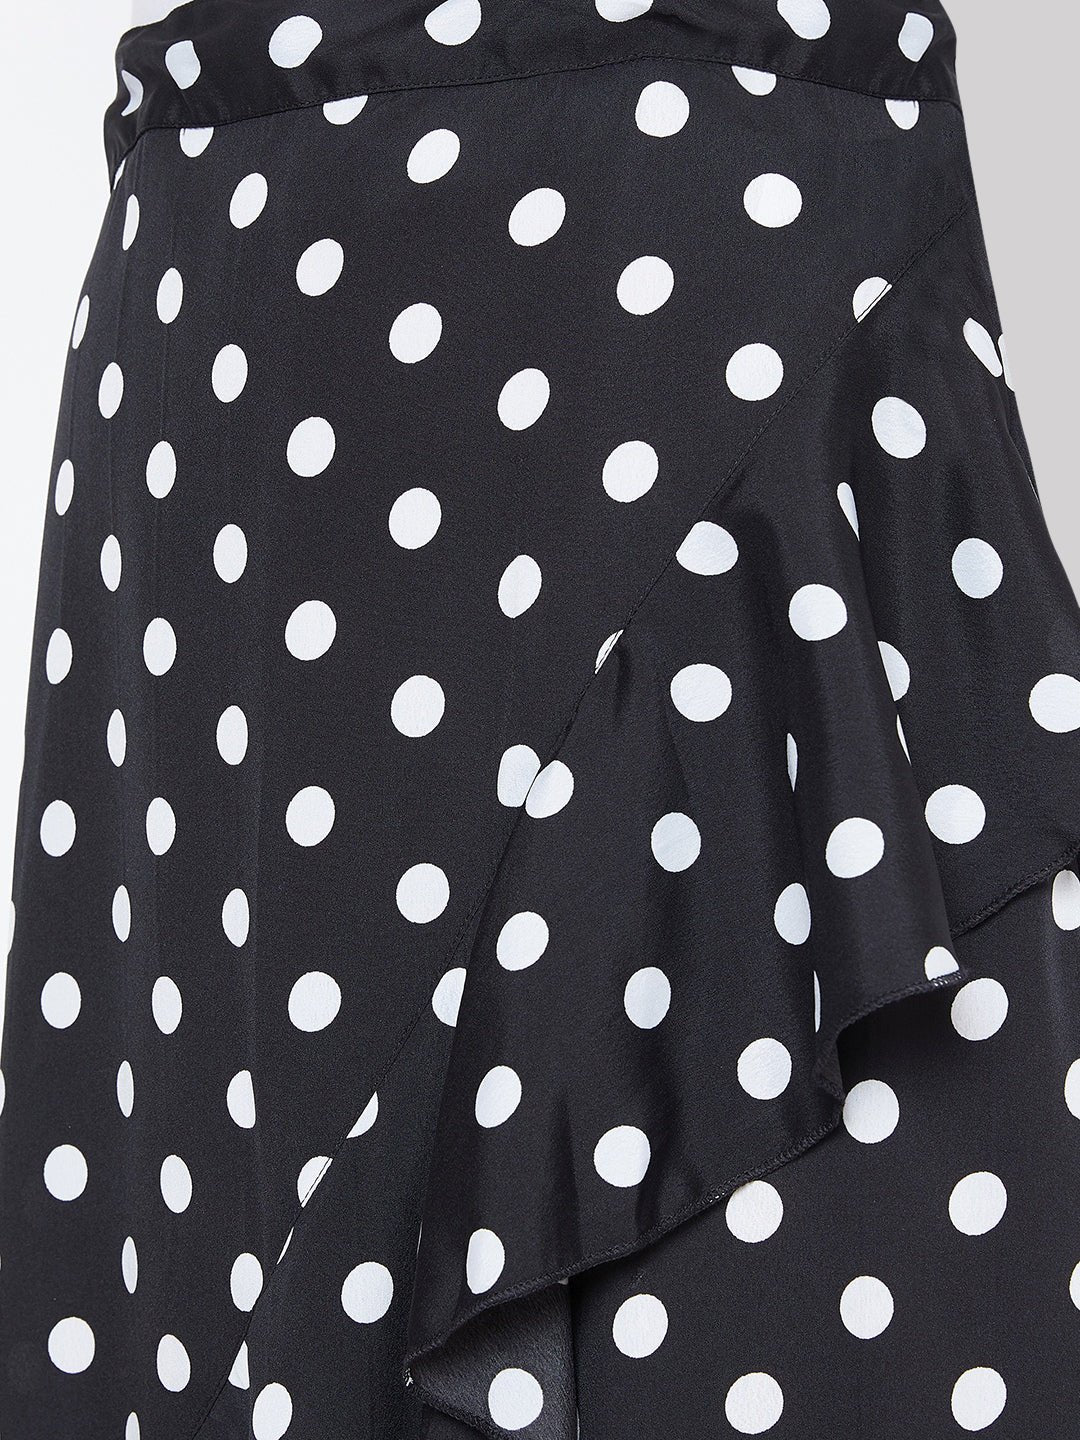 Folk Republic Women Black Polka Dot Print Ruffled Wrap Midi Skirt - #folk republic#